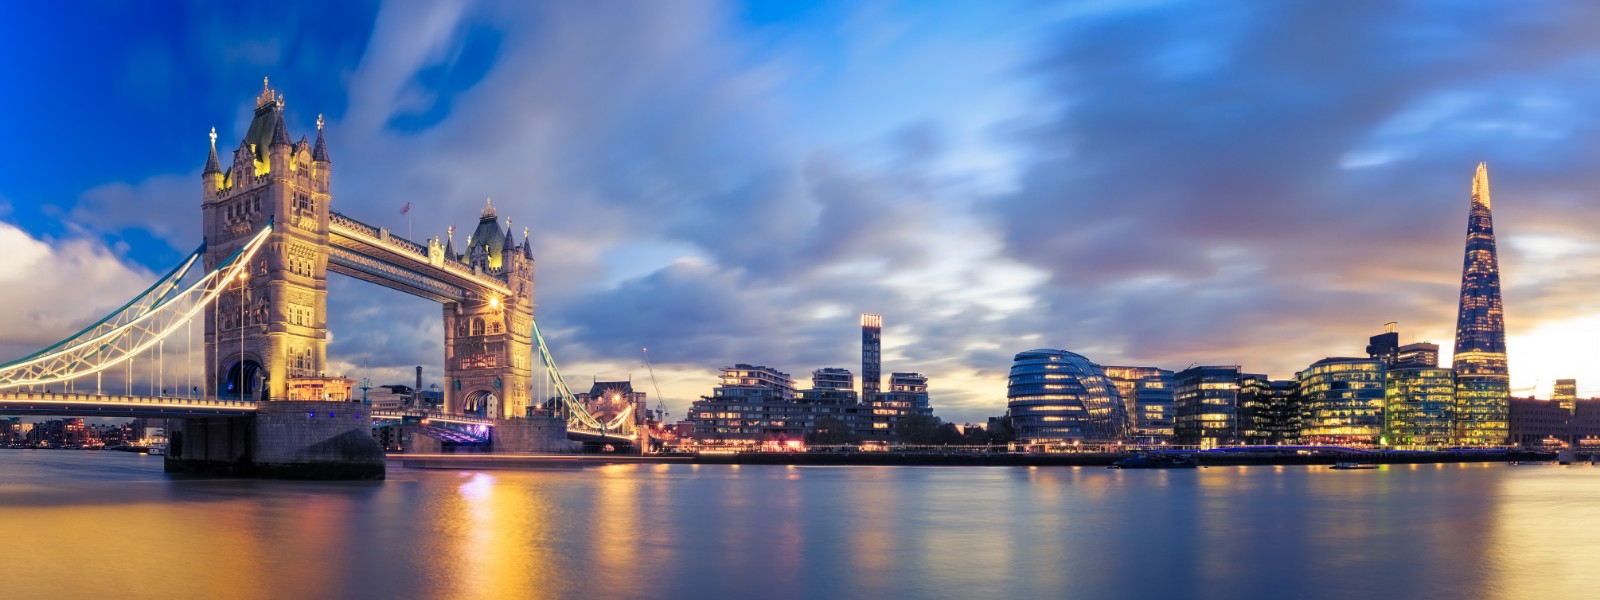 London skyline with tower bridge